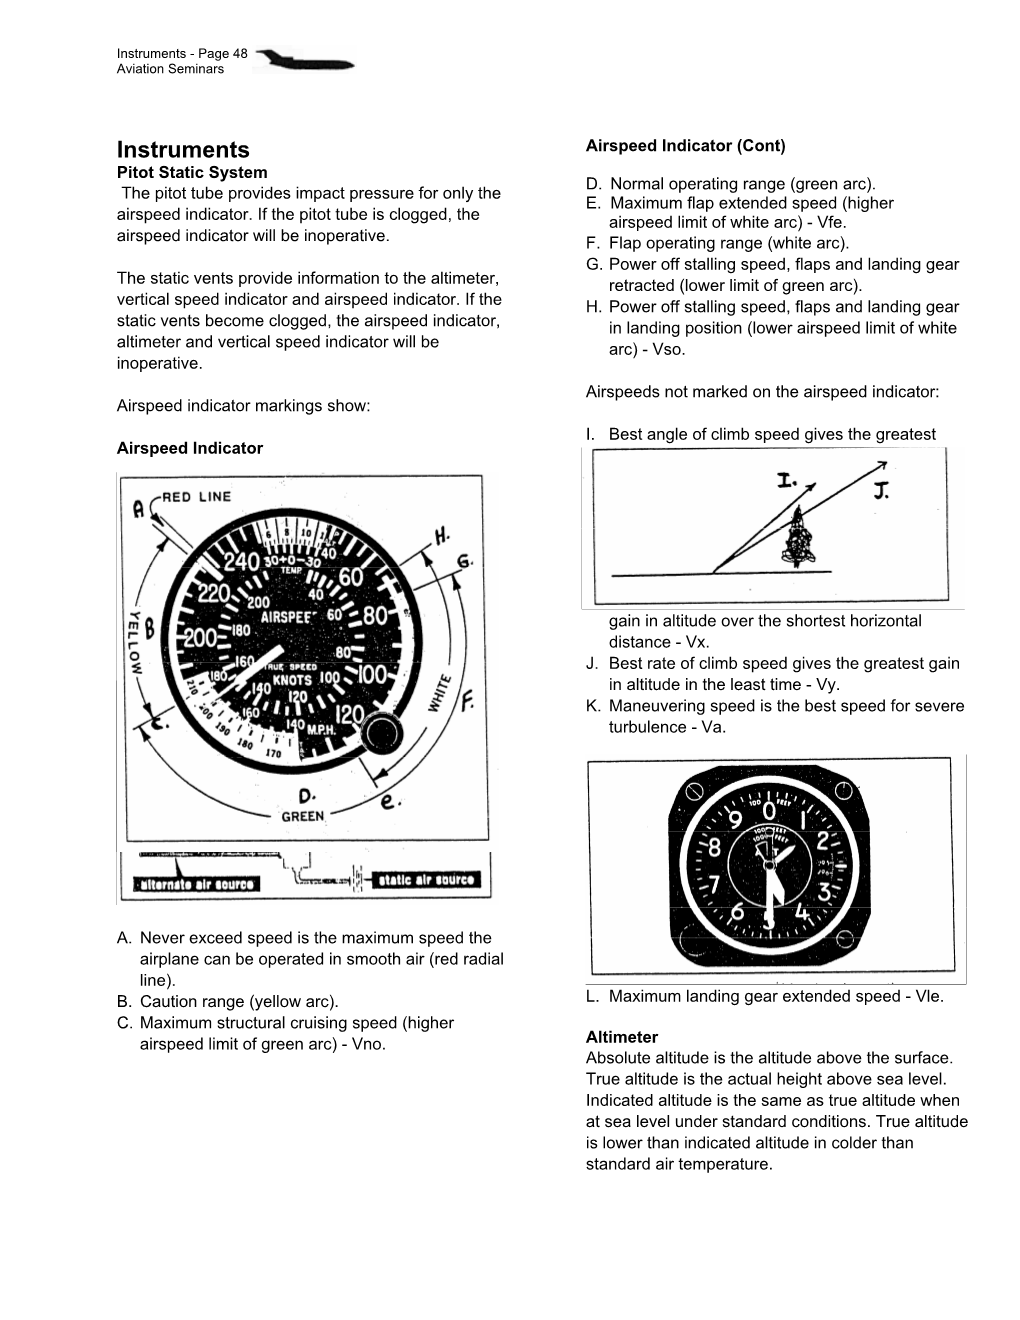 Instruments - Page 48 Aviation Seminars